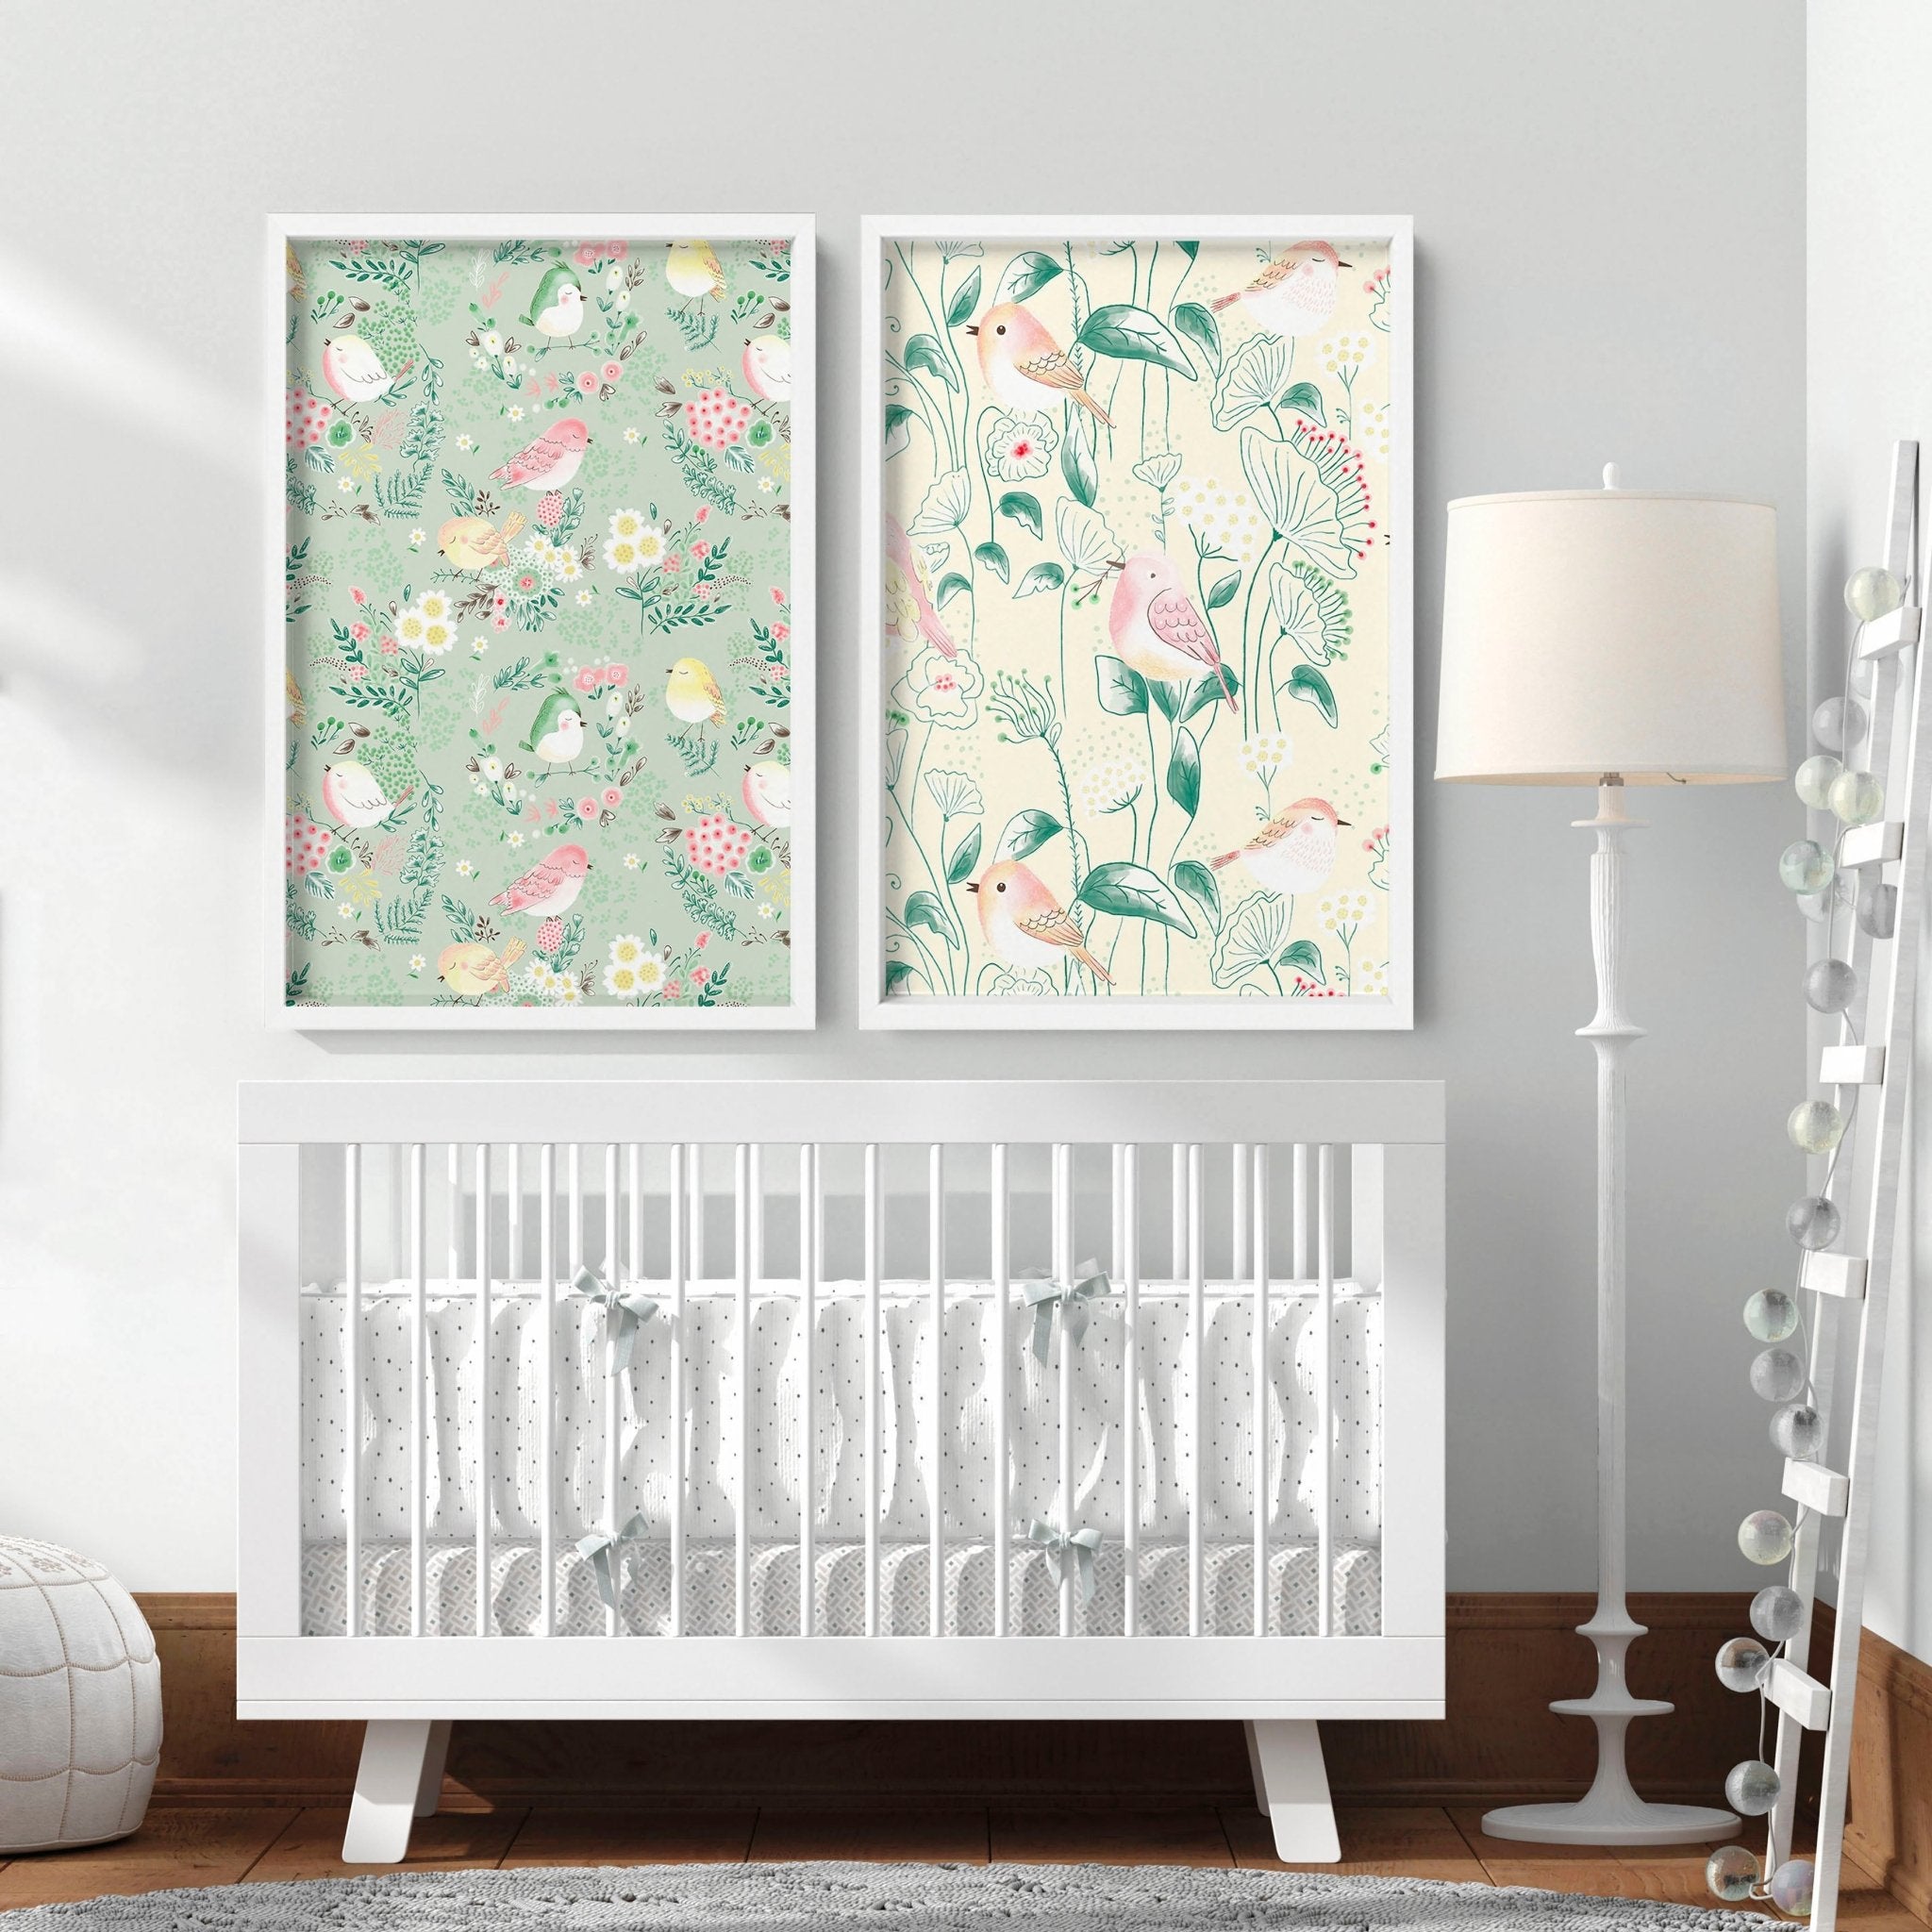 Cute Nursery decor woodland themed | set of 2 wall art prints - About Wall Art